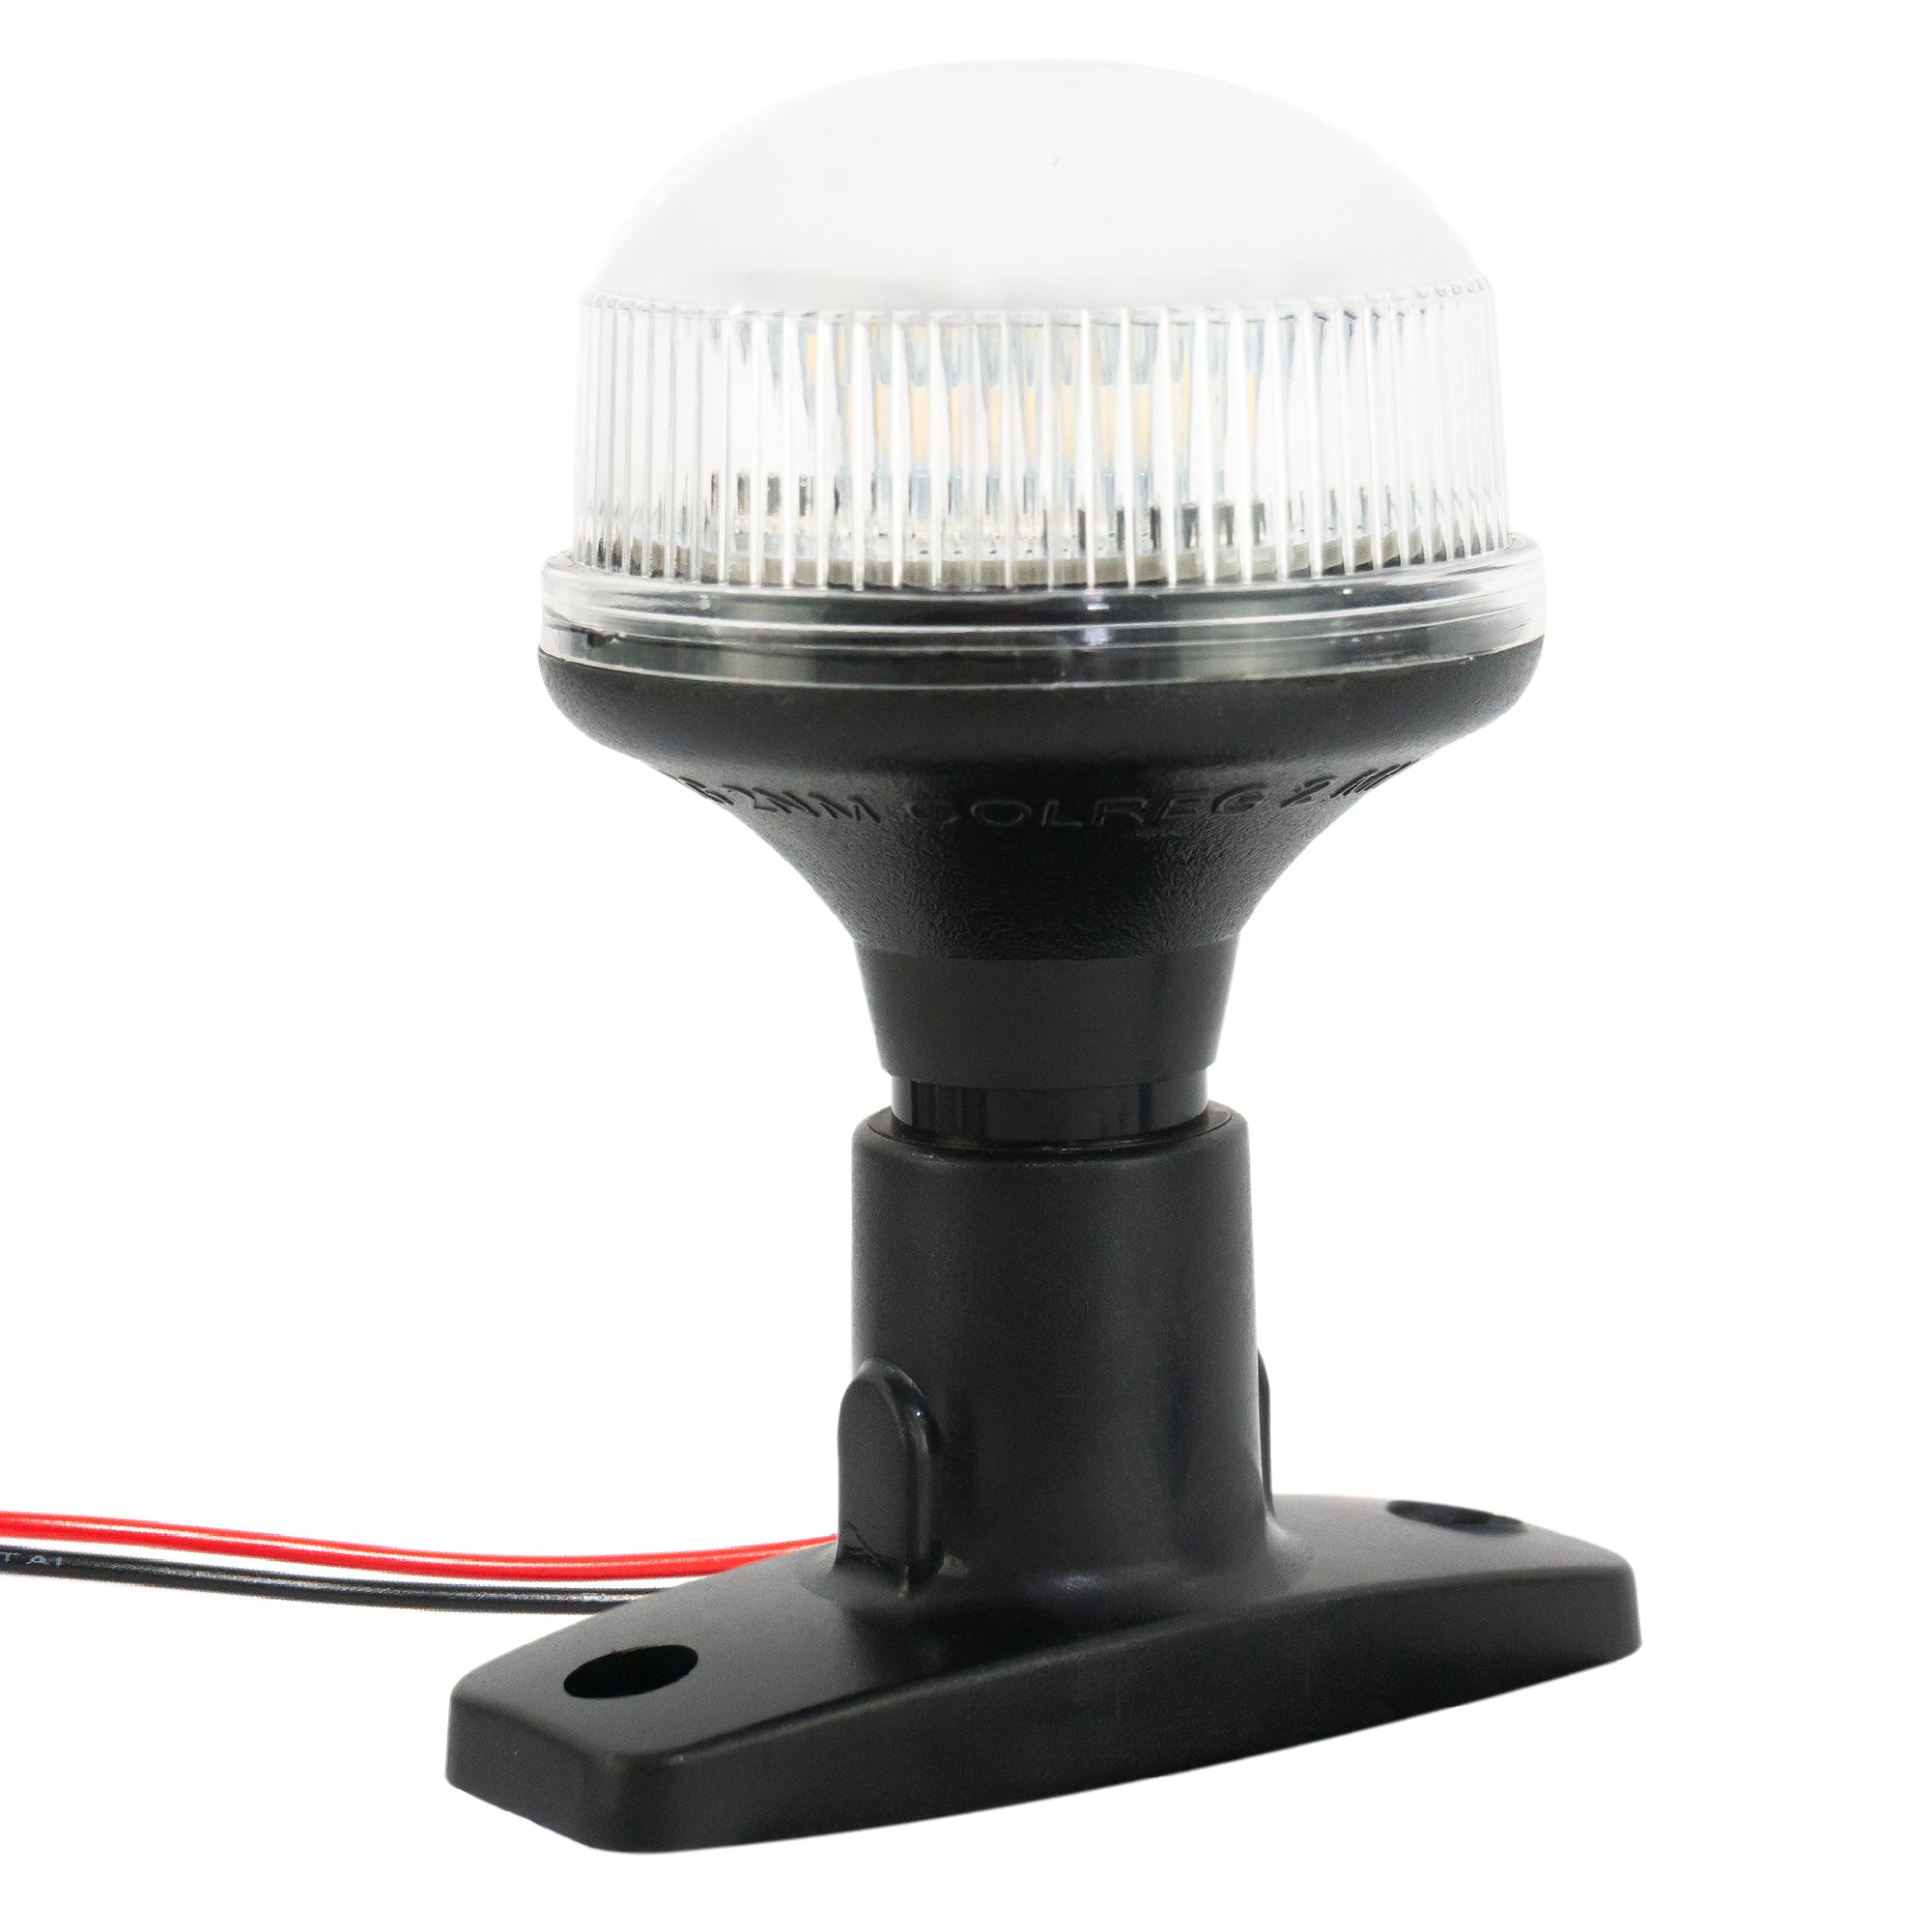 LED Anchor Navigation Light, 4" 2NM - FO4481